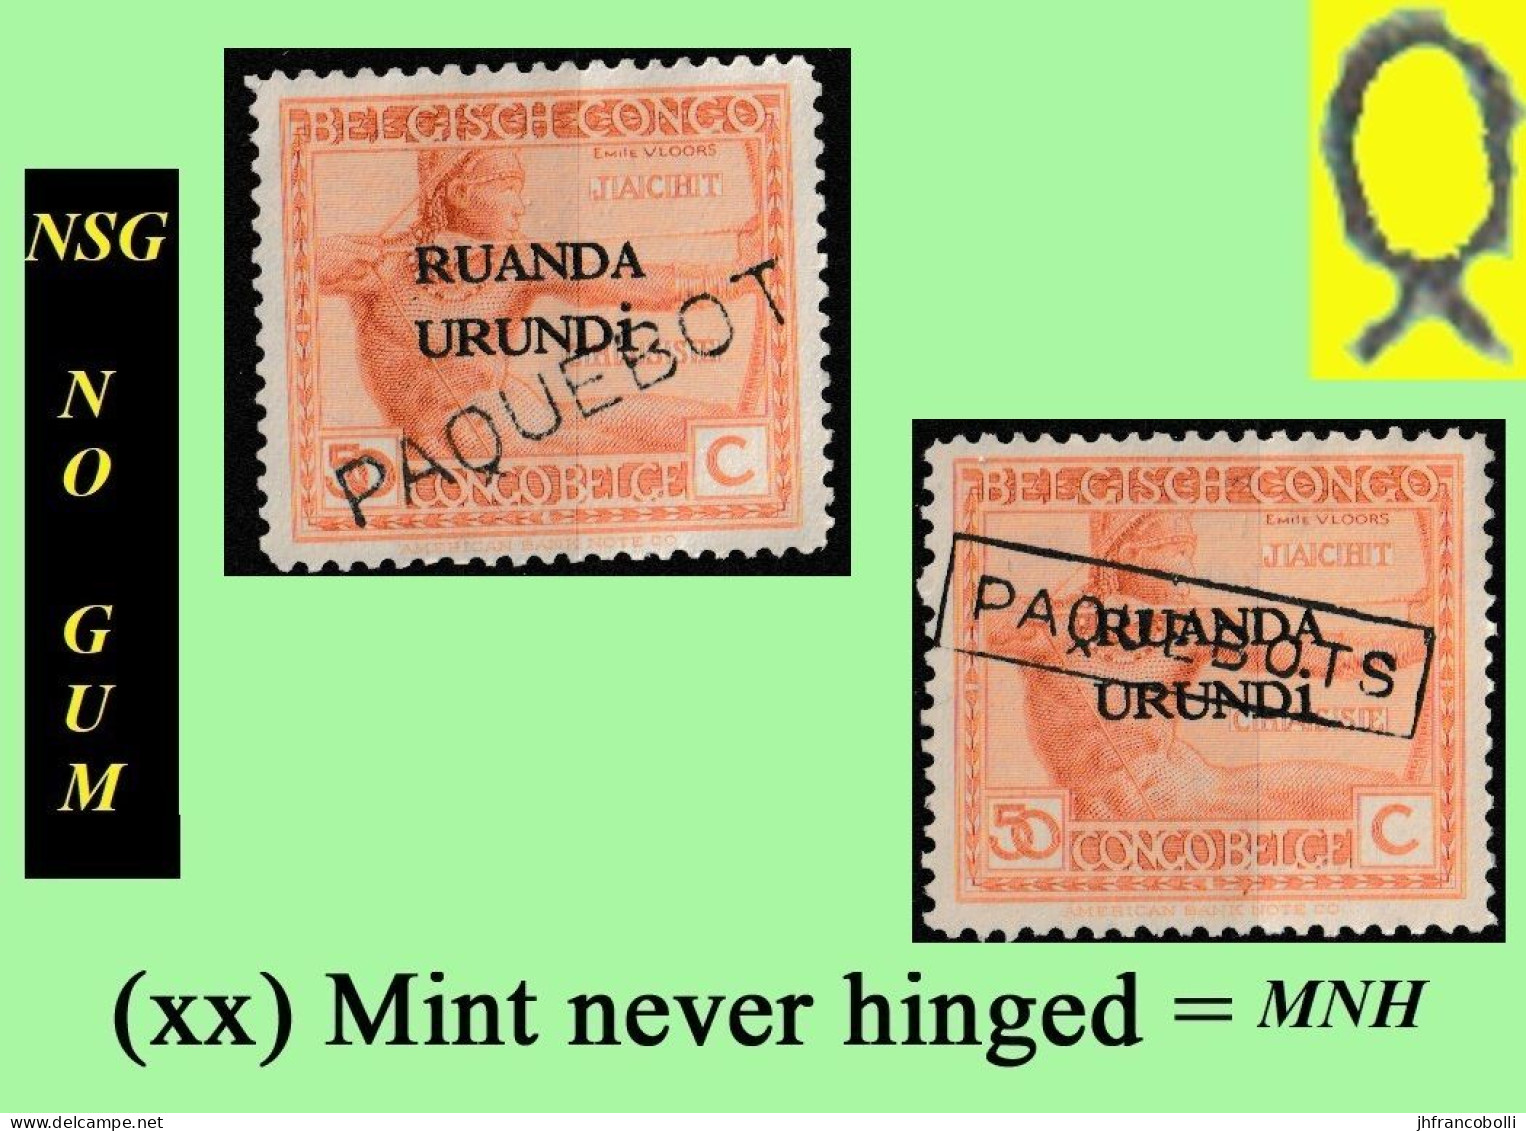 1925 ** RUANDA-URUNDI RU/MNH RU 067 PAQUEBOT ( SINGULAR+PLURAL) VLOORS 2 [B] ( X 2 Stamps ) NO GUM + ONLY 1 WITH A FRAME - Ungebraucht